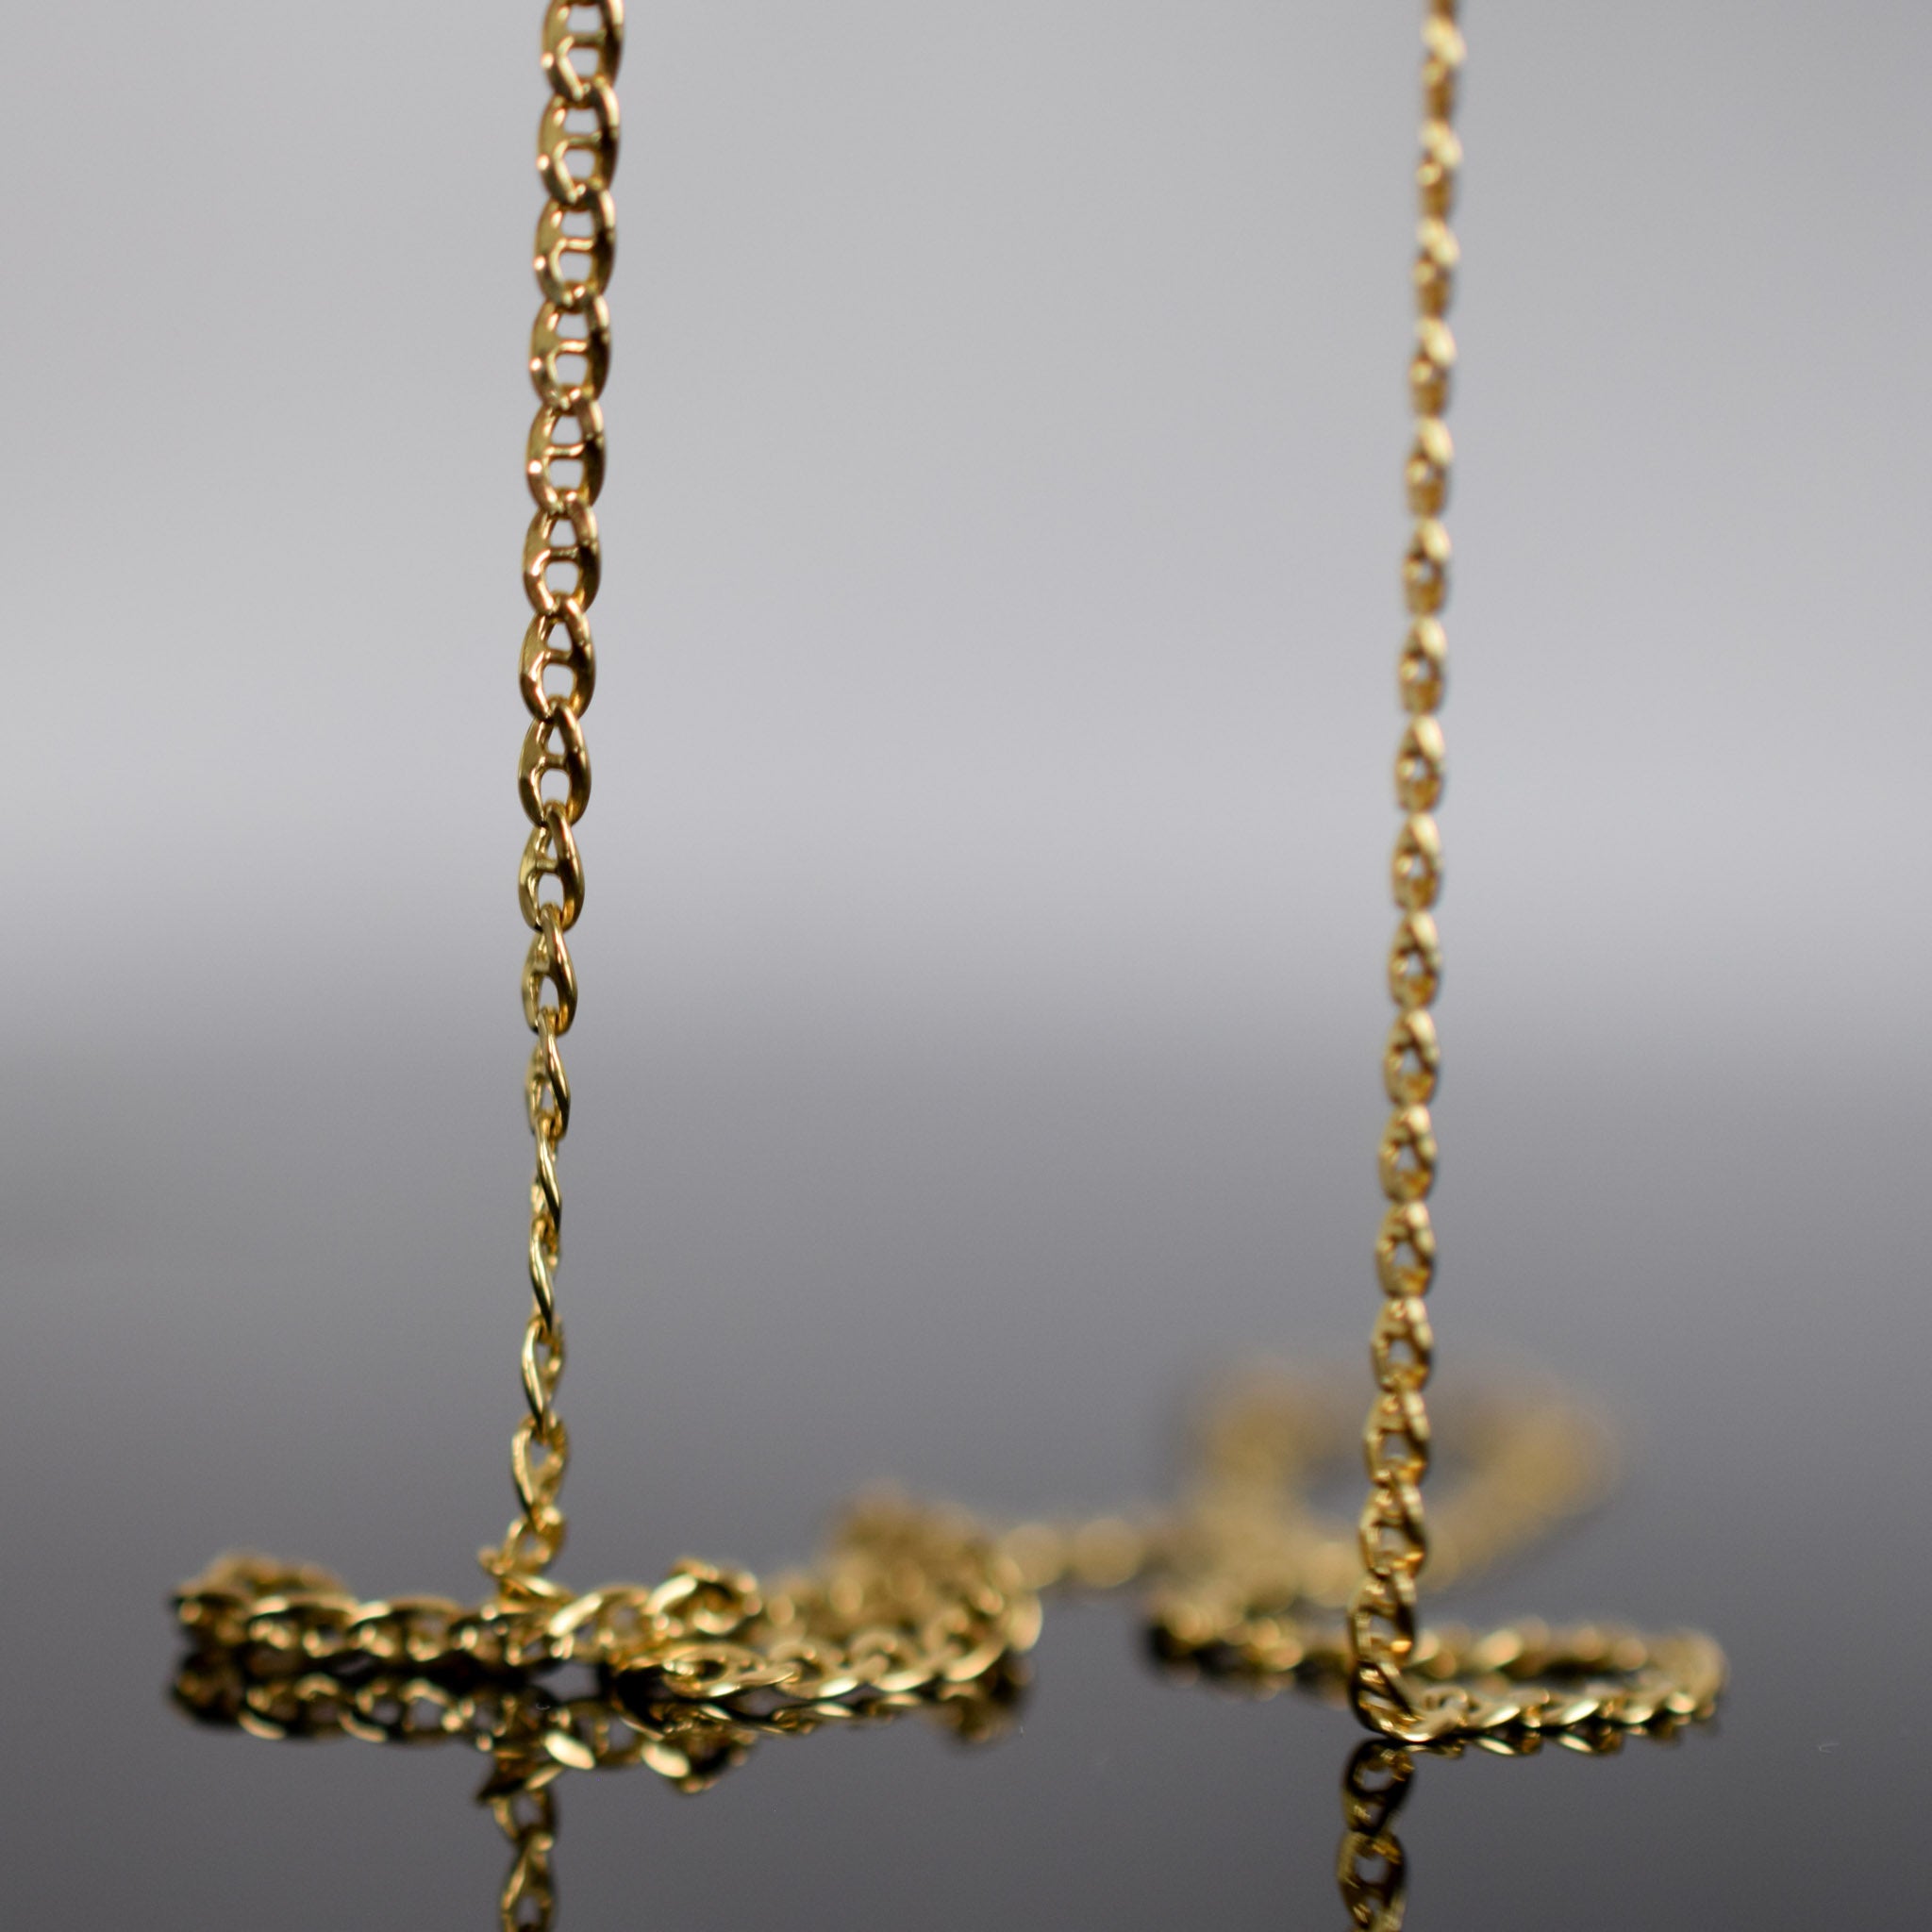 Mariner Chain Necklace for sale, folklor 